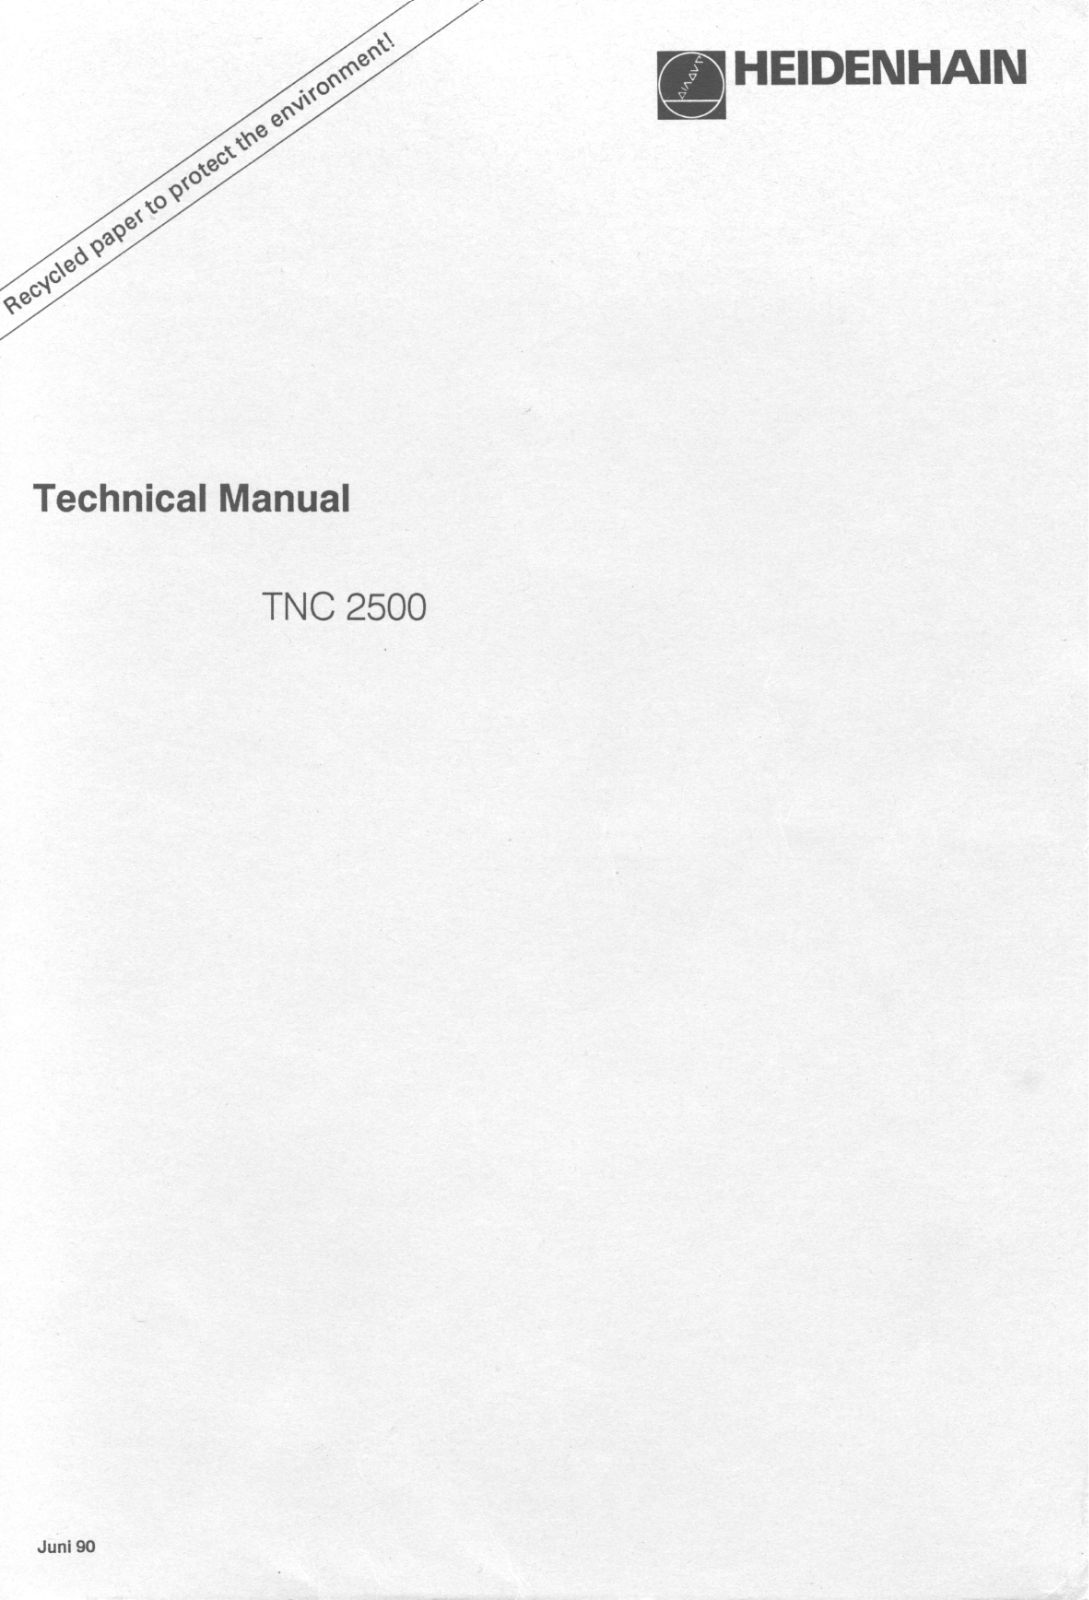 heidenhain TNC 2500 Technical Manual